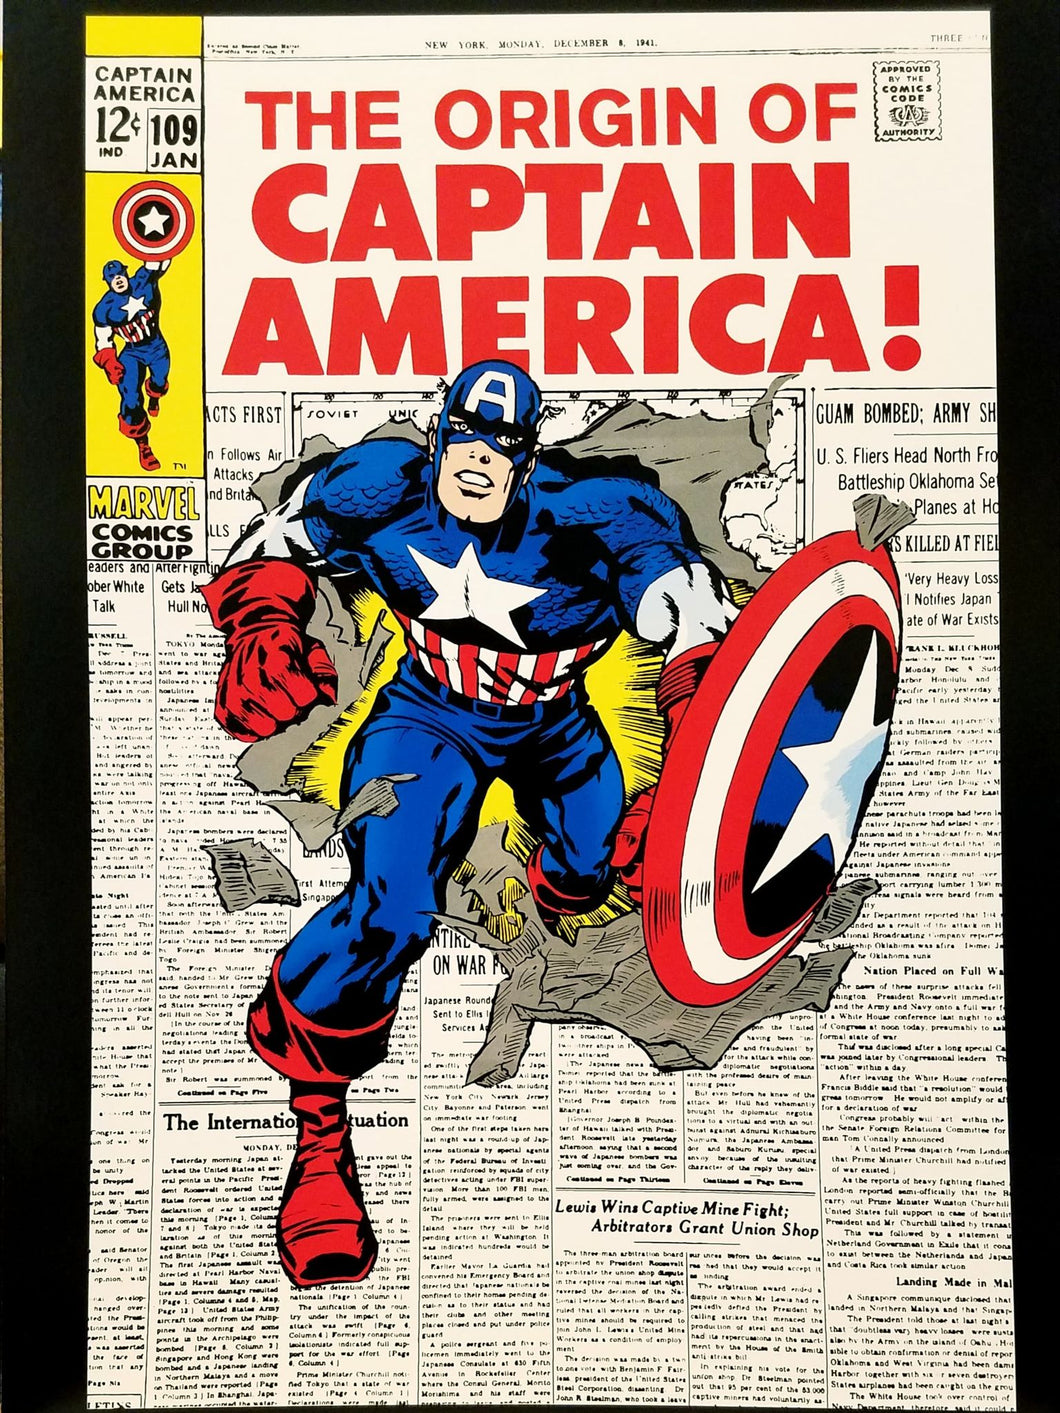 Captain America #109 12x16 FRAMED Art Poster Print by Jack Kirby, 1969 Marvel Comics